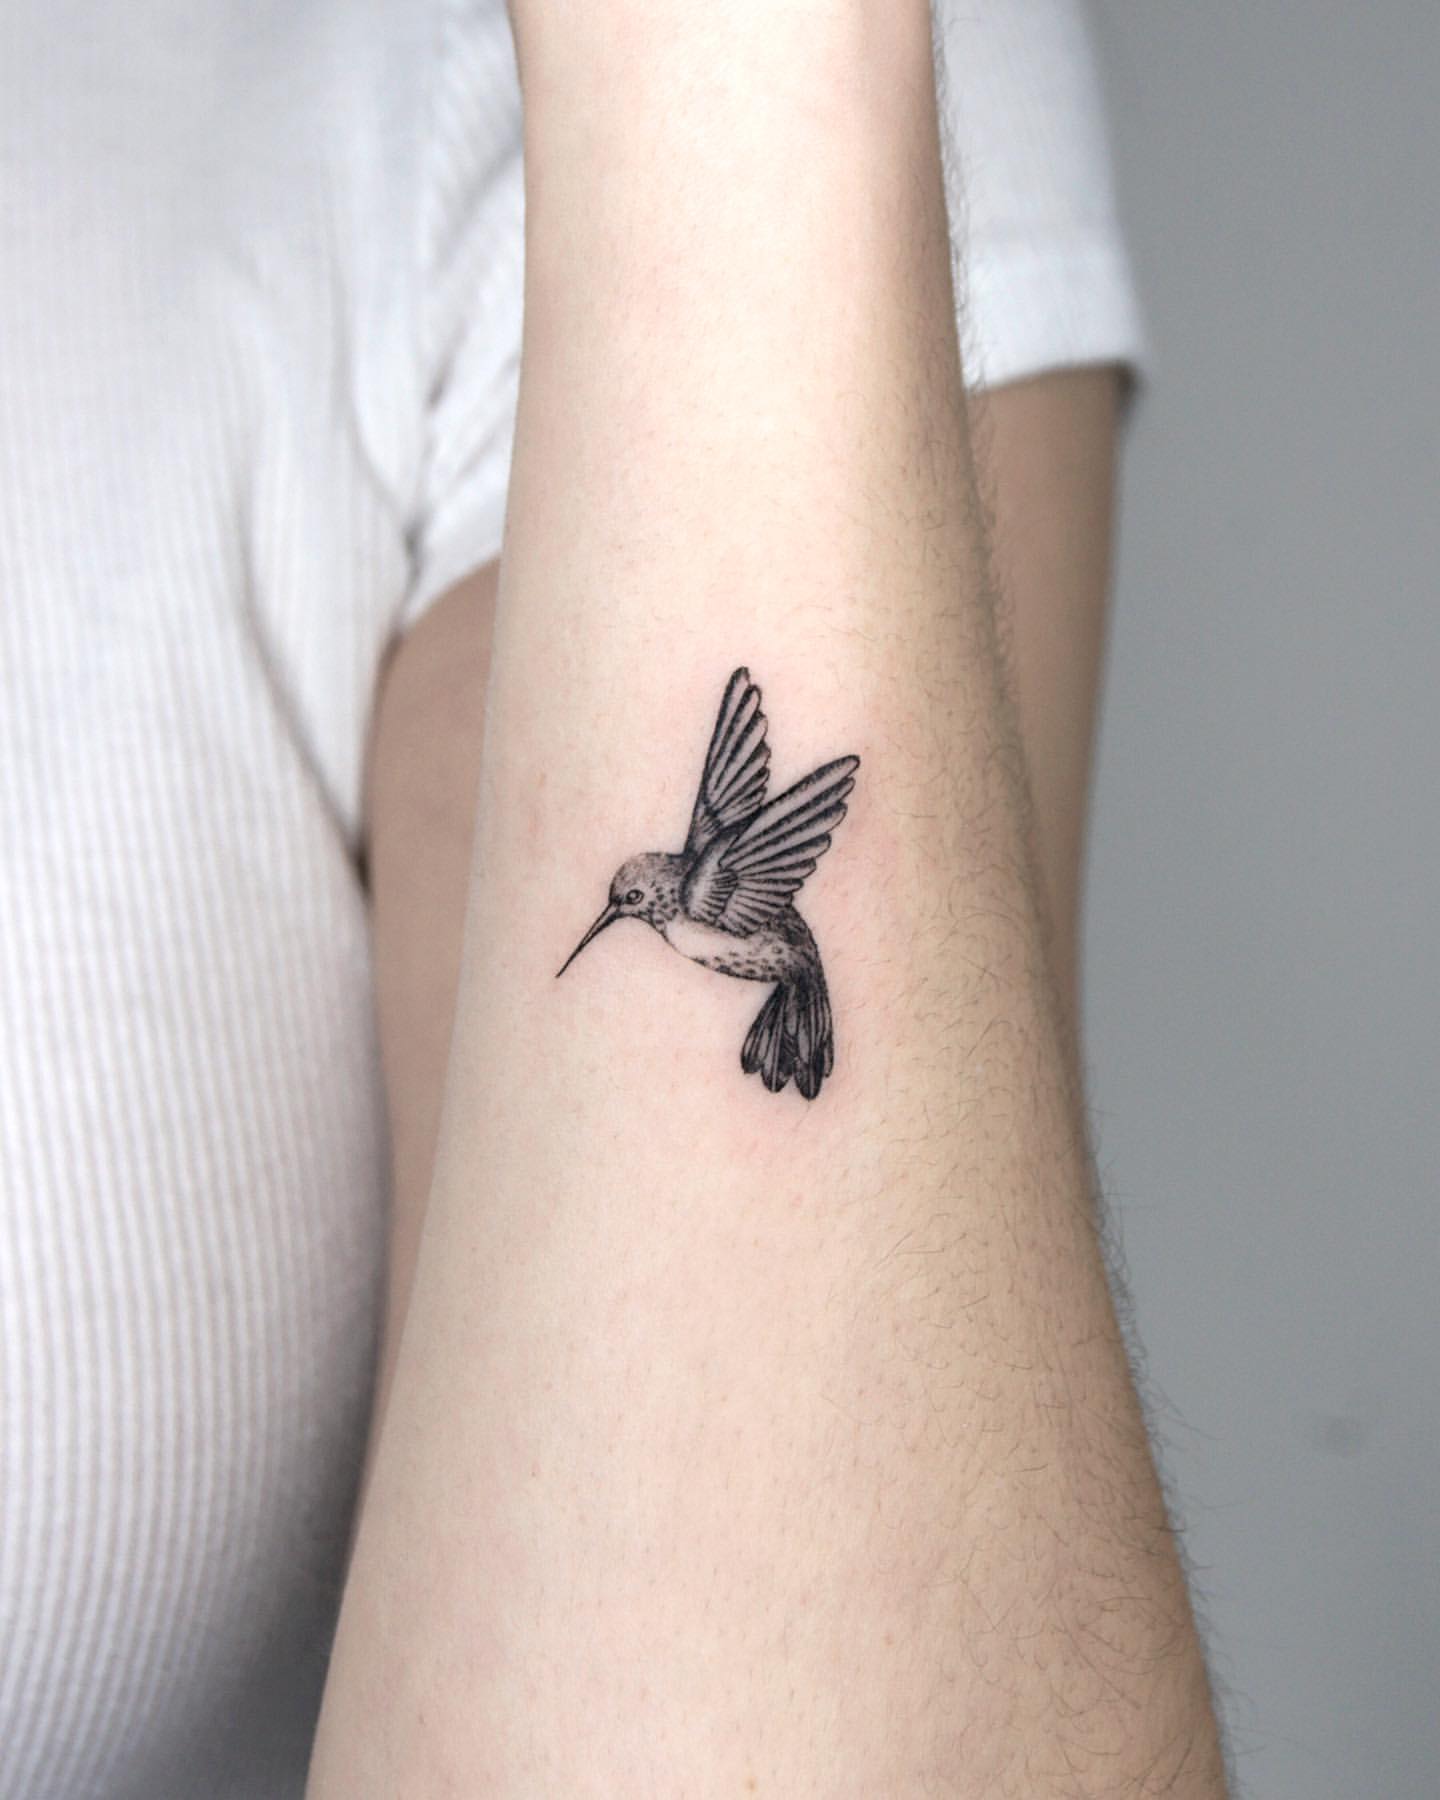 Hummingbird tattoo ideas for women